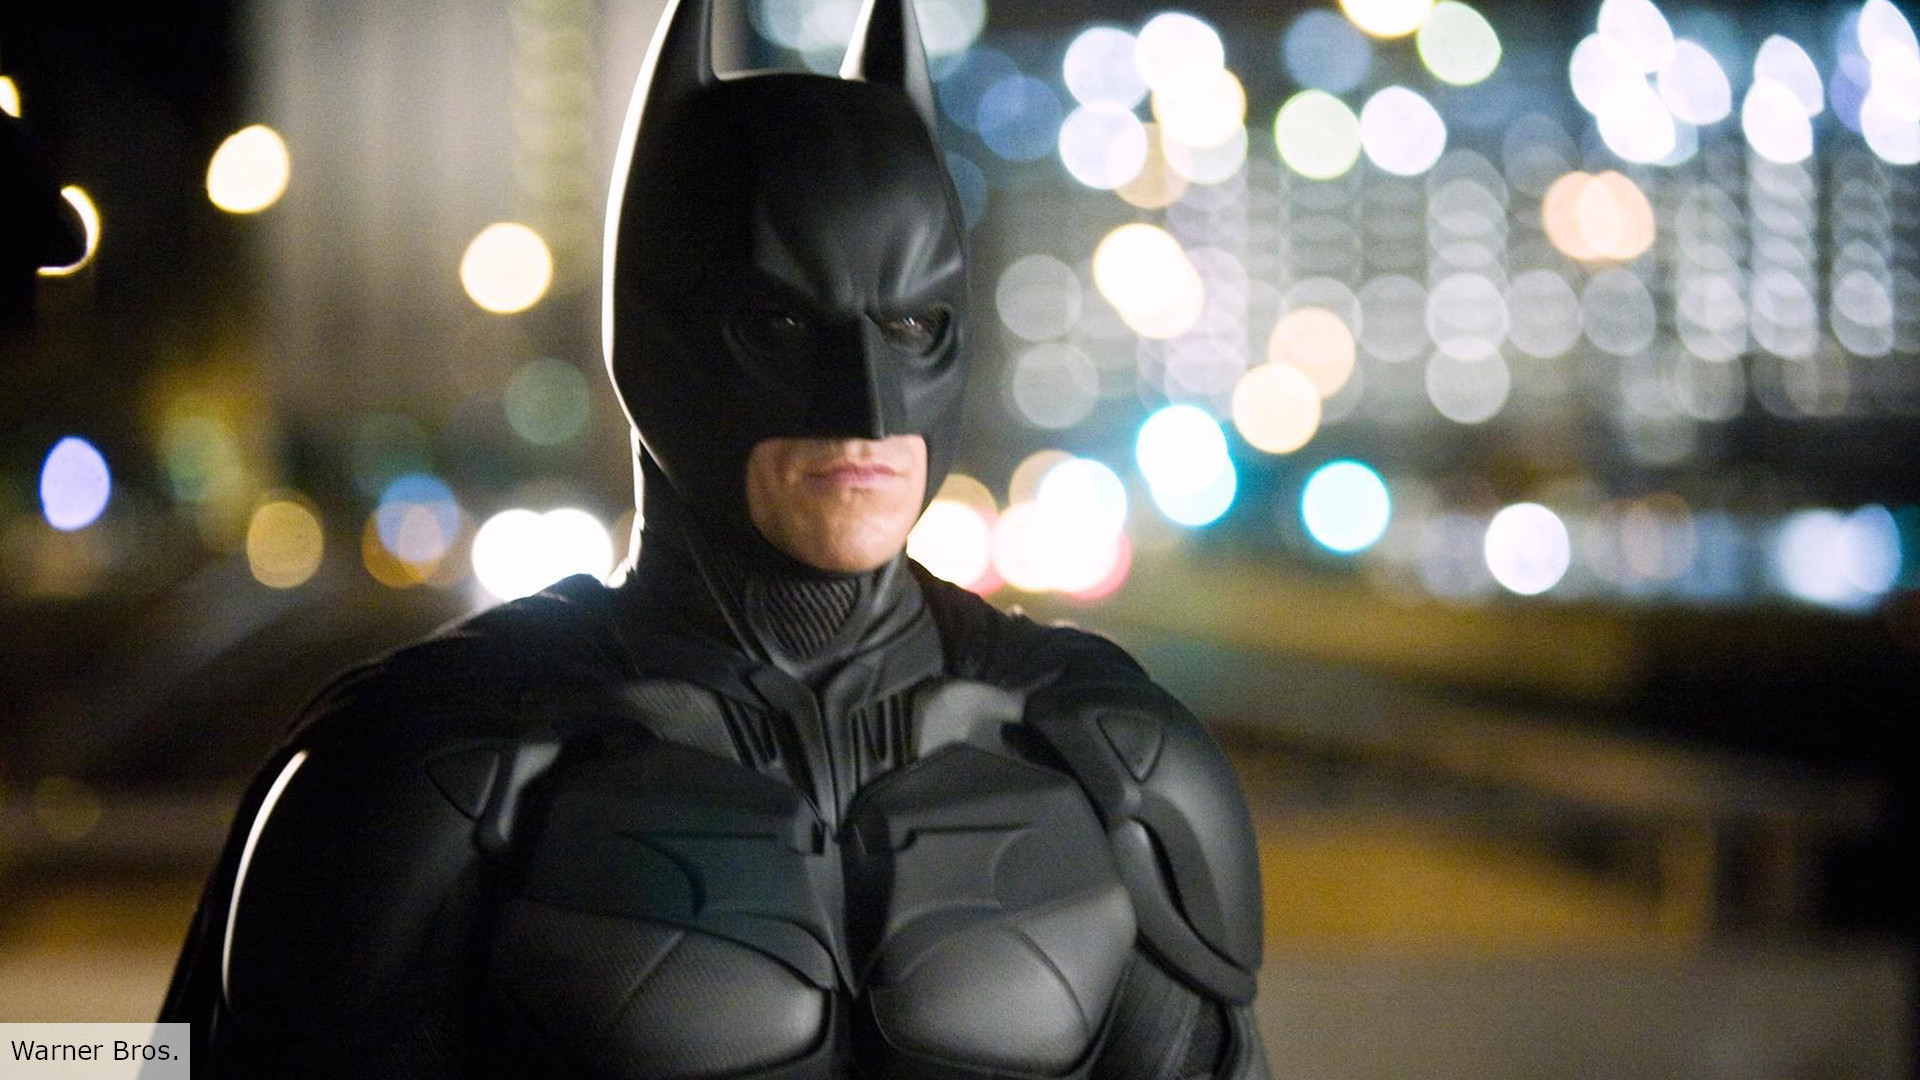 Christian Bale wasn't Nolan's first choice for Batman | The Digital Fix